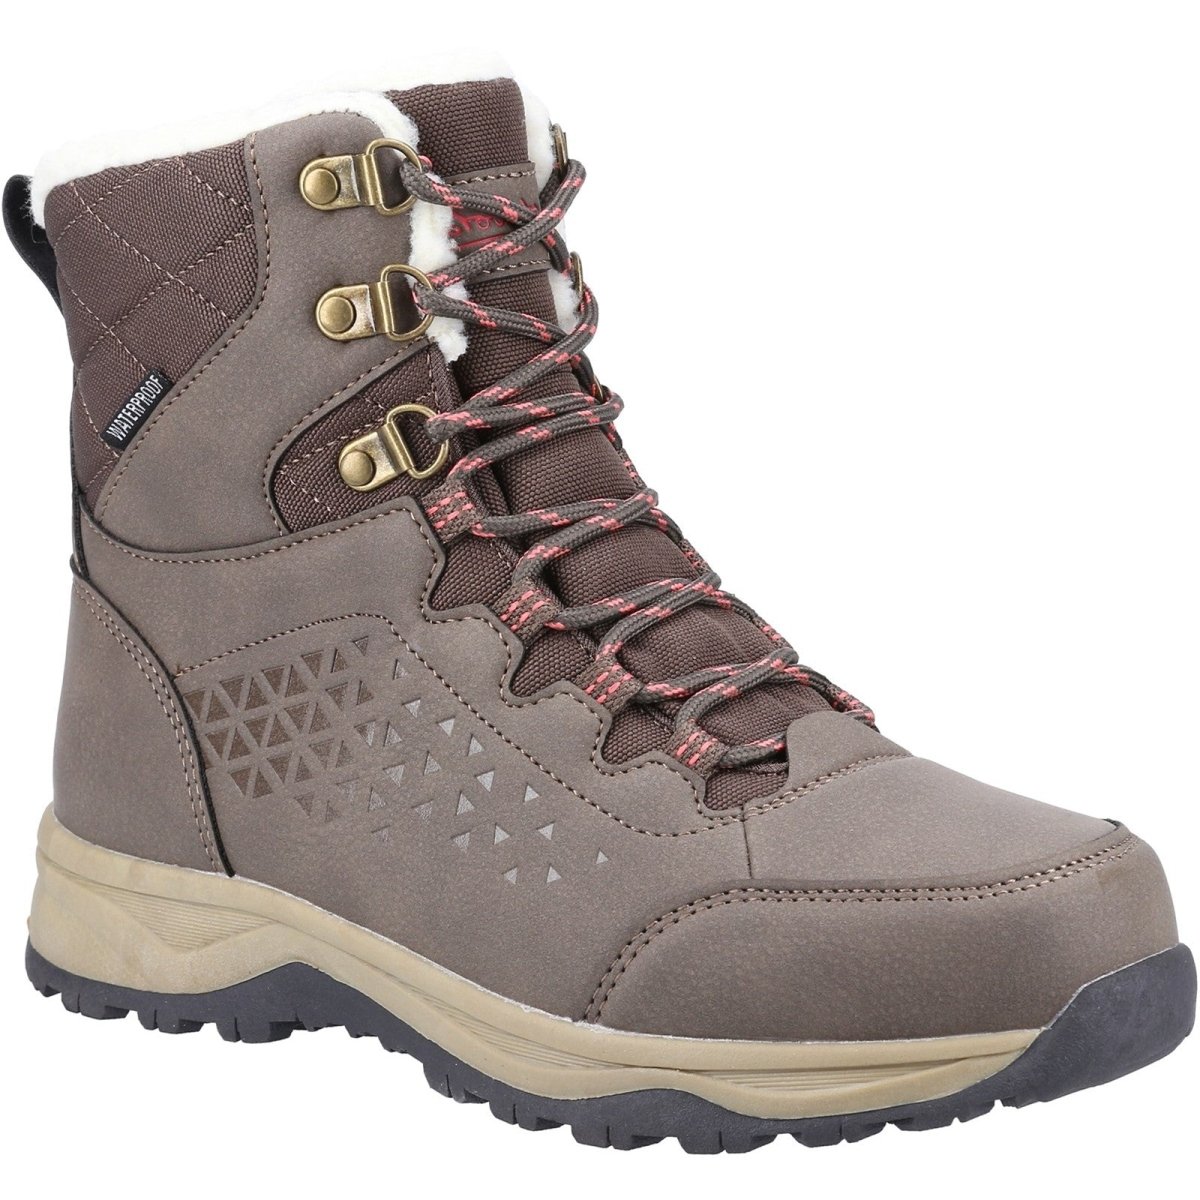 Cotswold Burton Hiking Boots - Shoe Store Direct